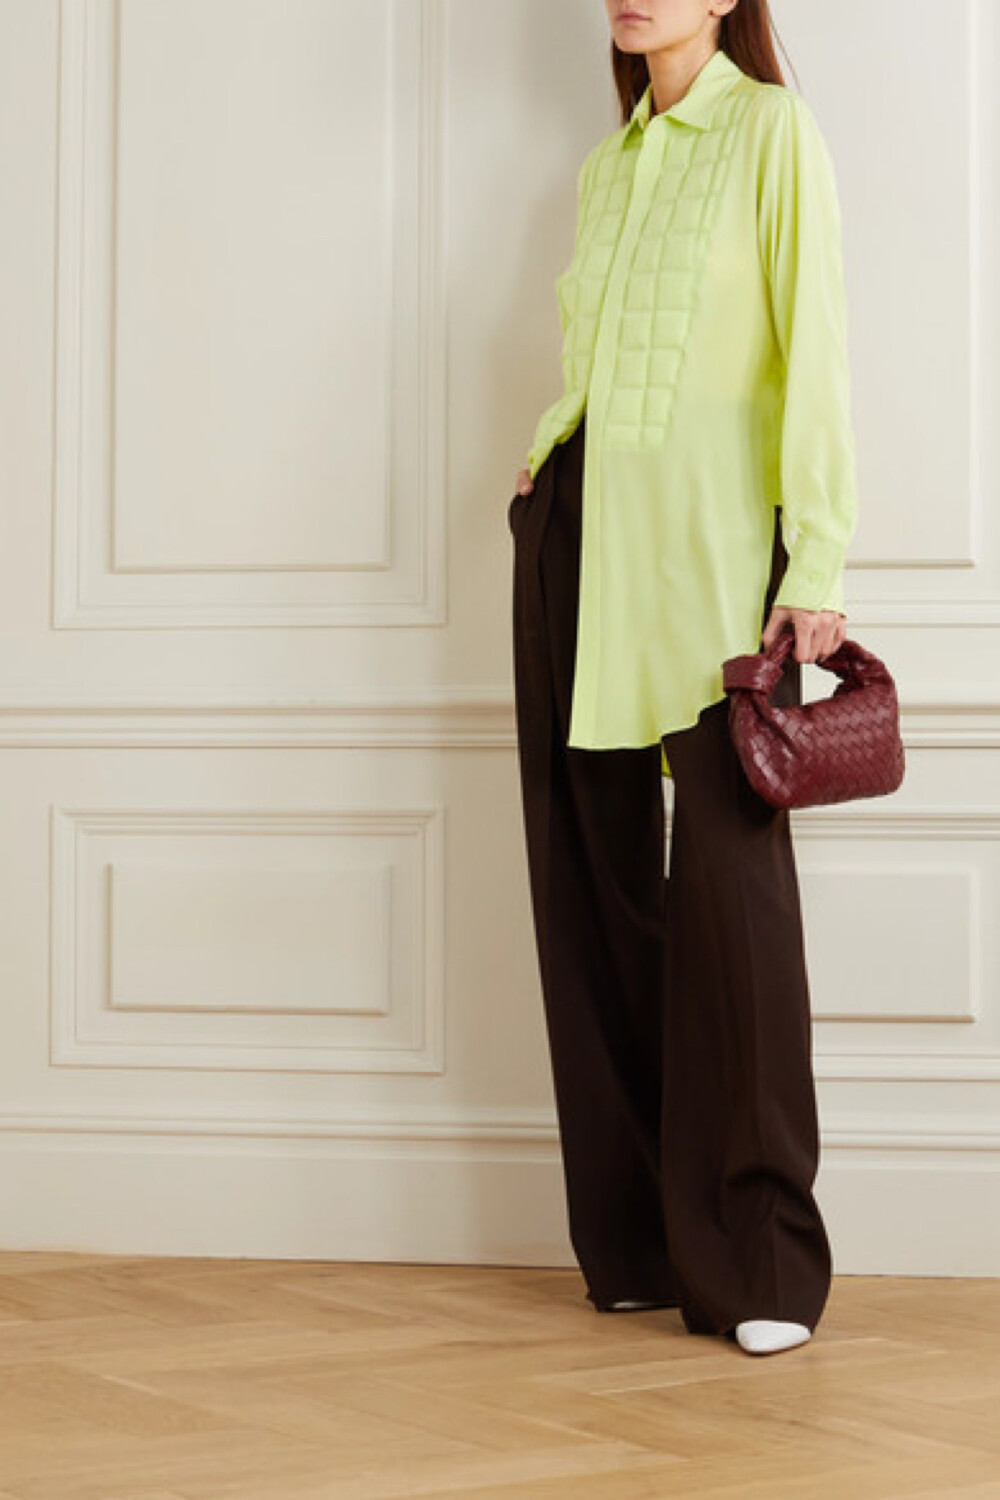 
Bottega Veneta 创意总监 Daniel Lee 重塑品牌标志性的 Intrecciato 编织工艺，推出的新季系列囊括了不少人气单品。其中这款柠檬绿色双绉女衫，采用宽松的长款设计，还在过肩处以绗缝手法呈现出颇具辨识度的皮革条编织纹理，令人不禁想起该时装屋大热的包款和鞋履。